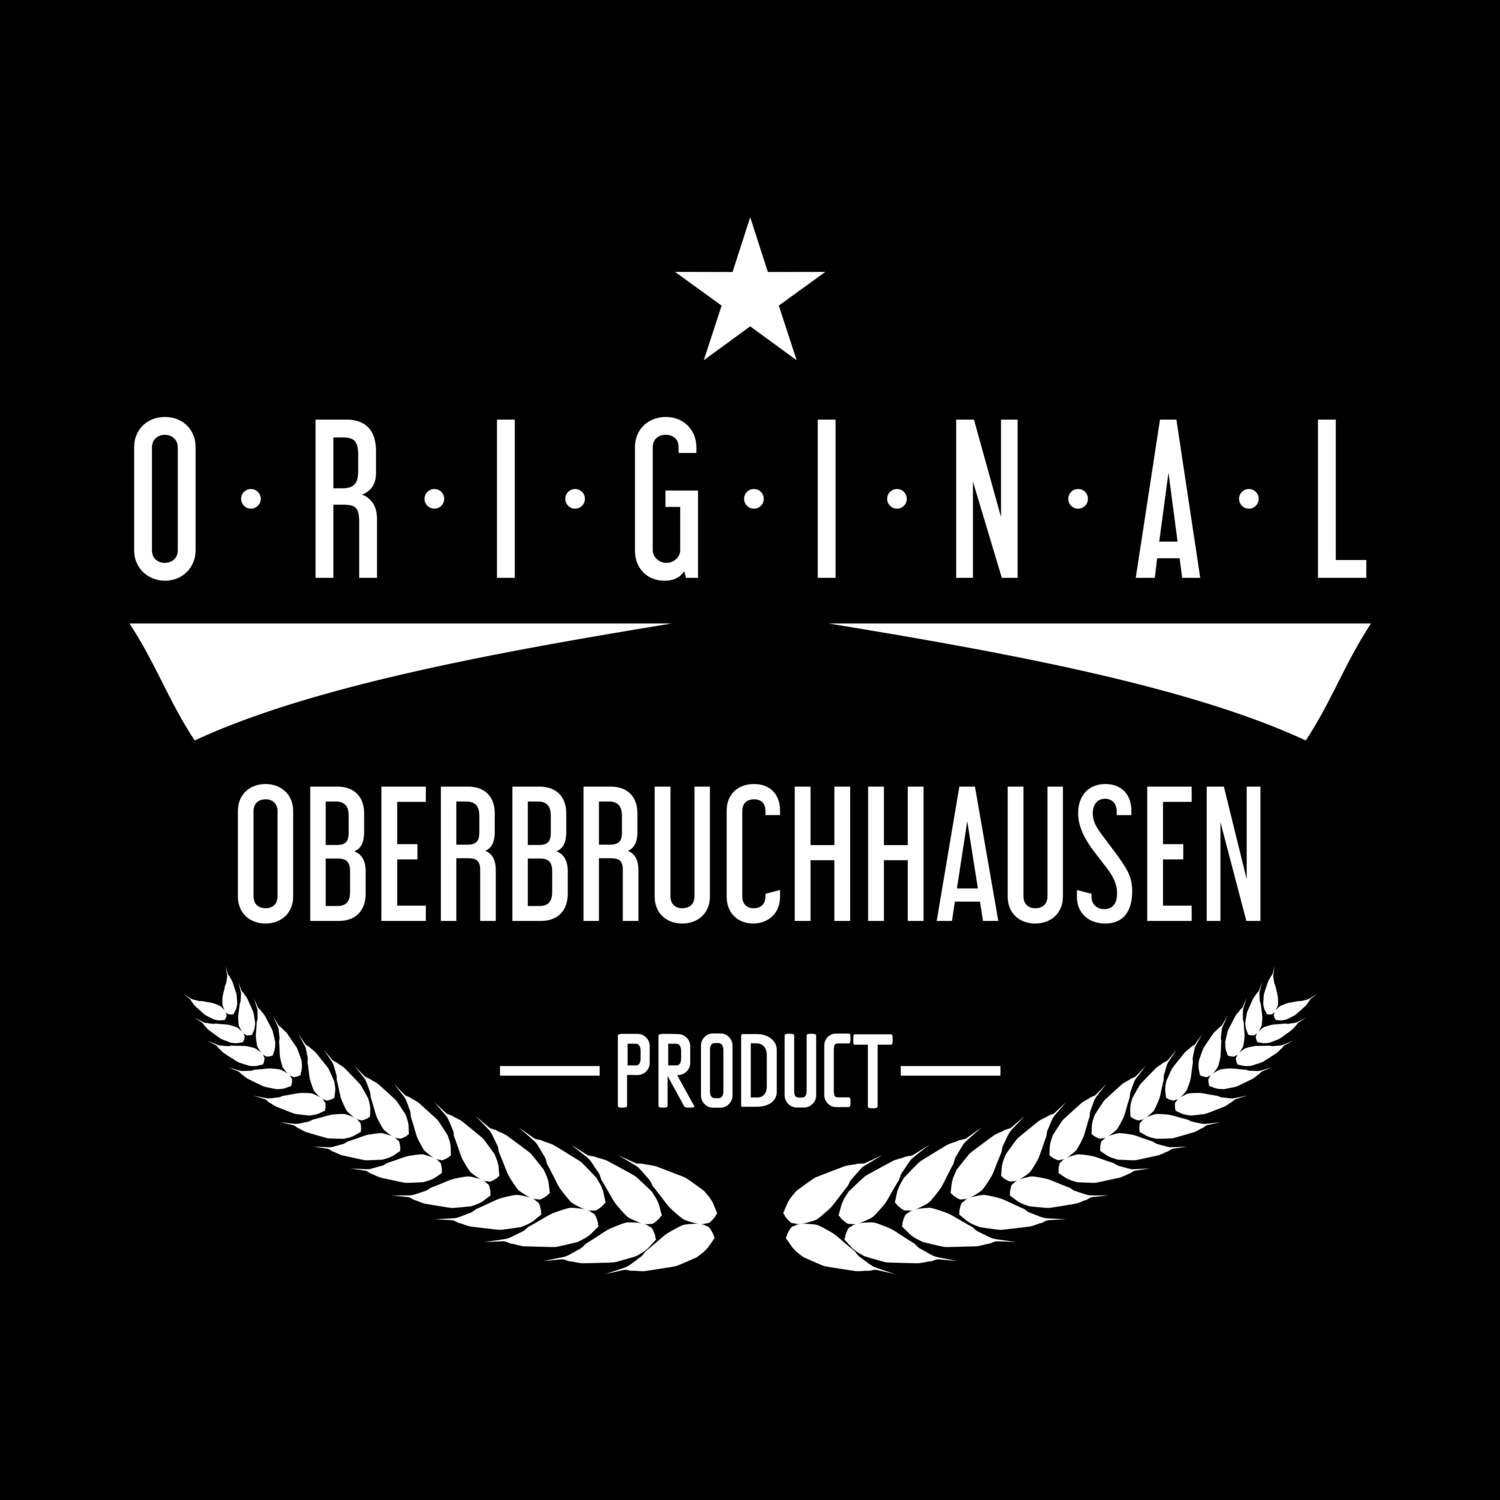 Oberbruchhausen T-Shirt »Original Product«